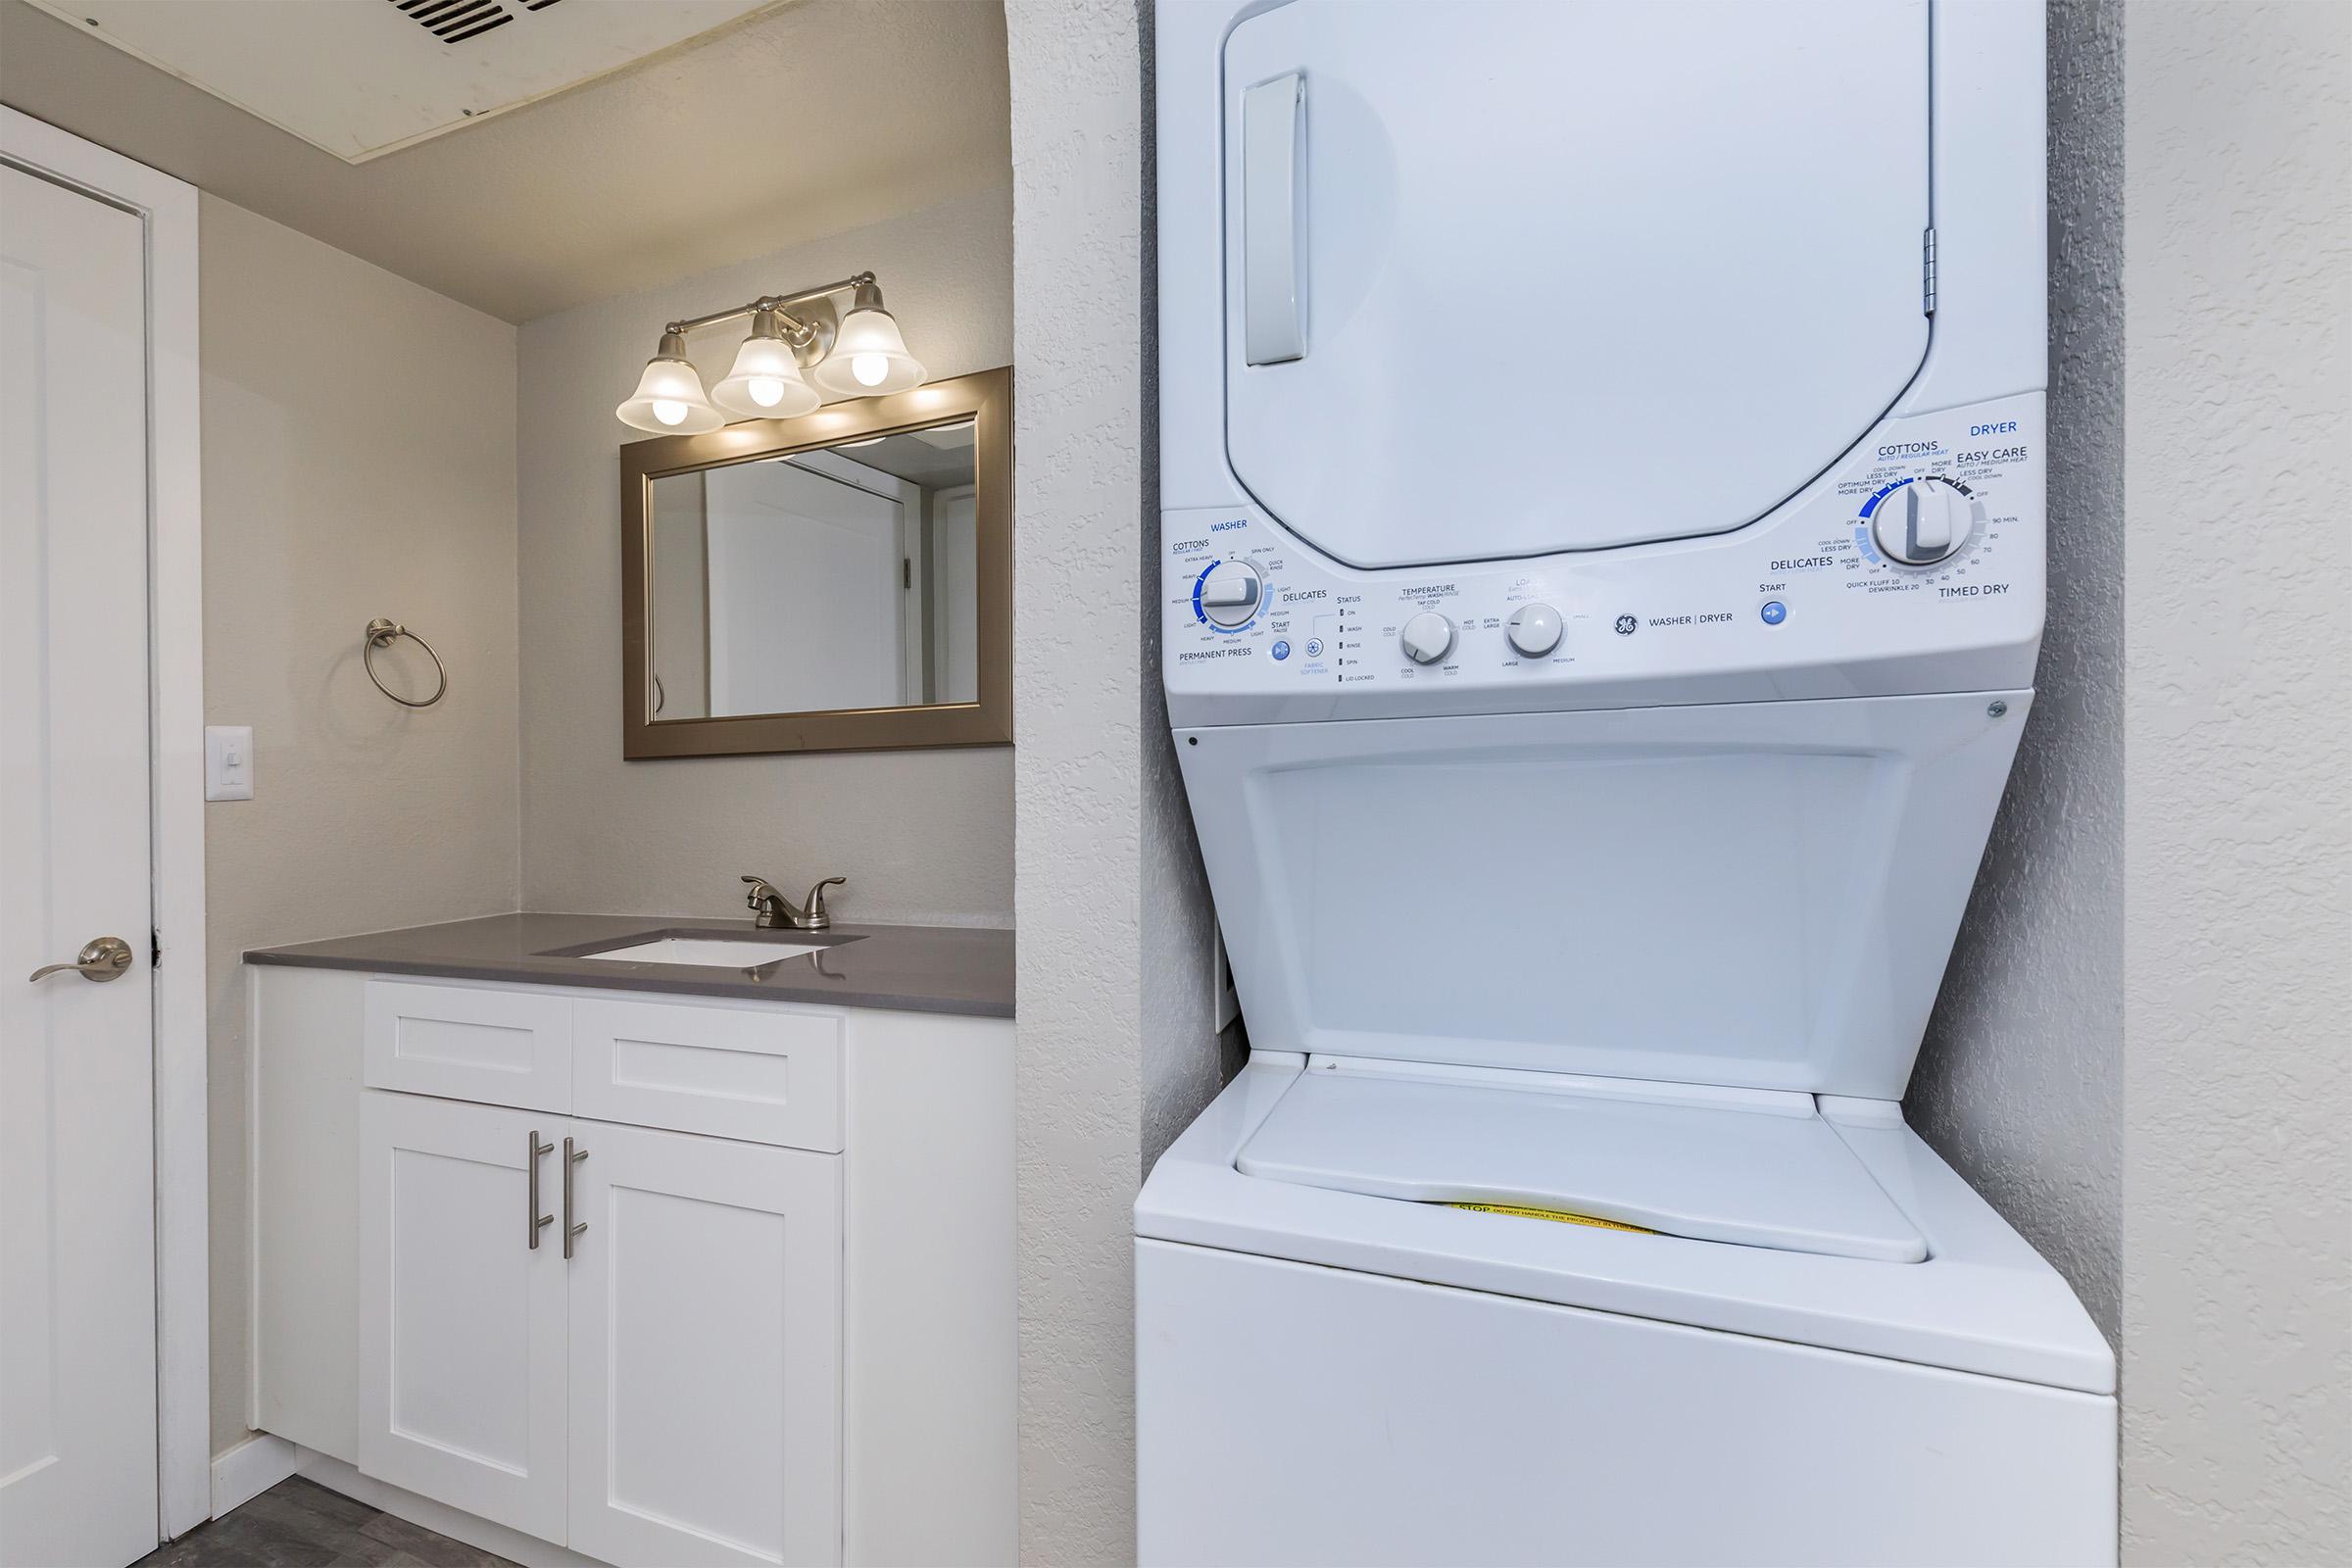 a white refrigerator freezer sitting next to a sink